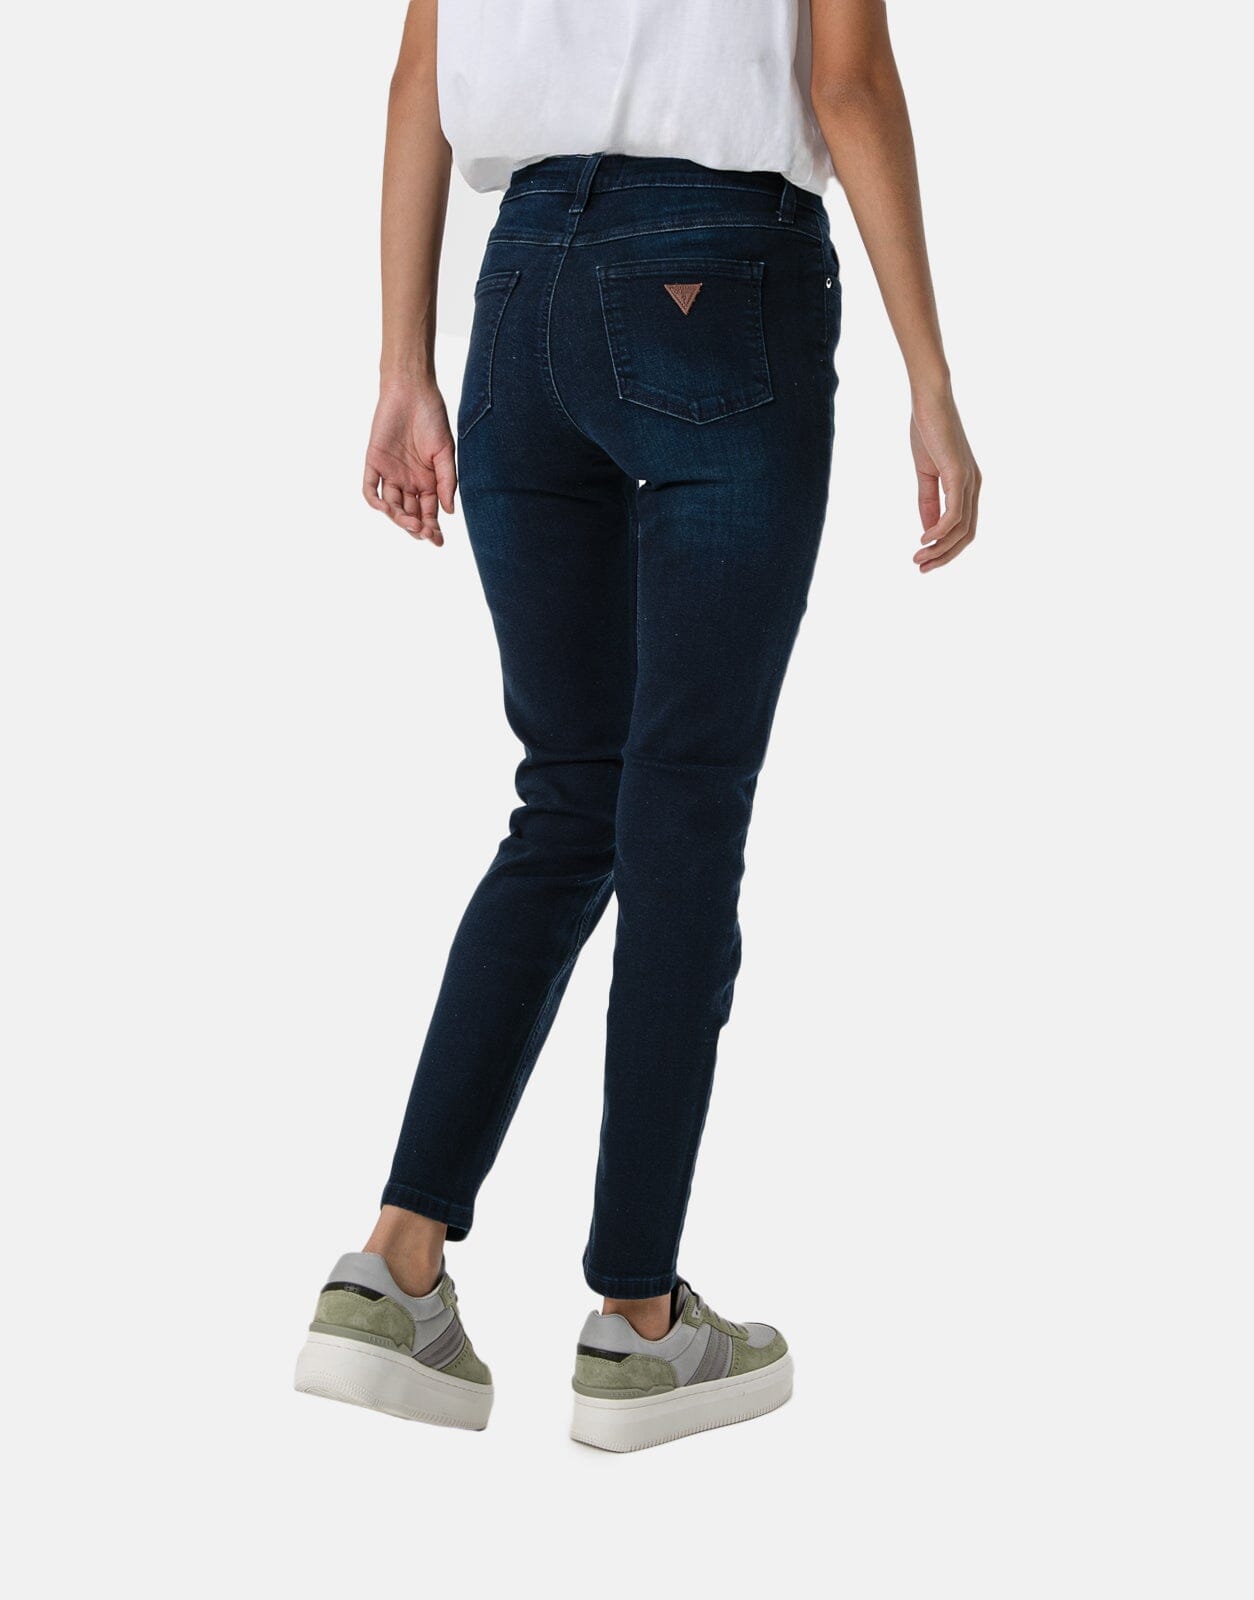 Guess Tina Sexy Curve Jeans - Subwear